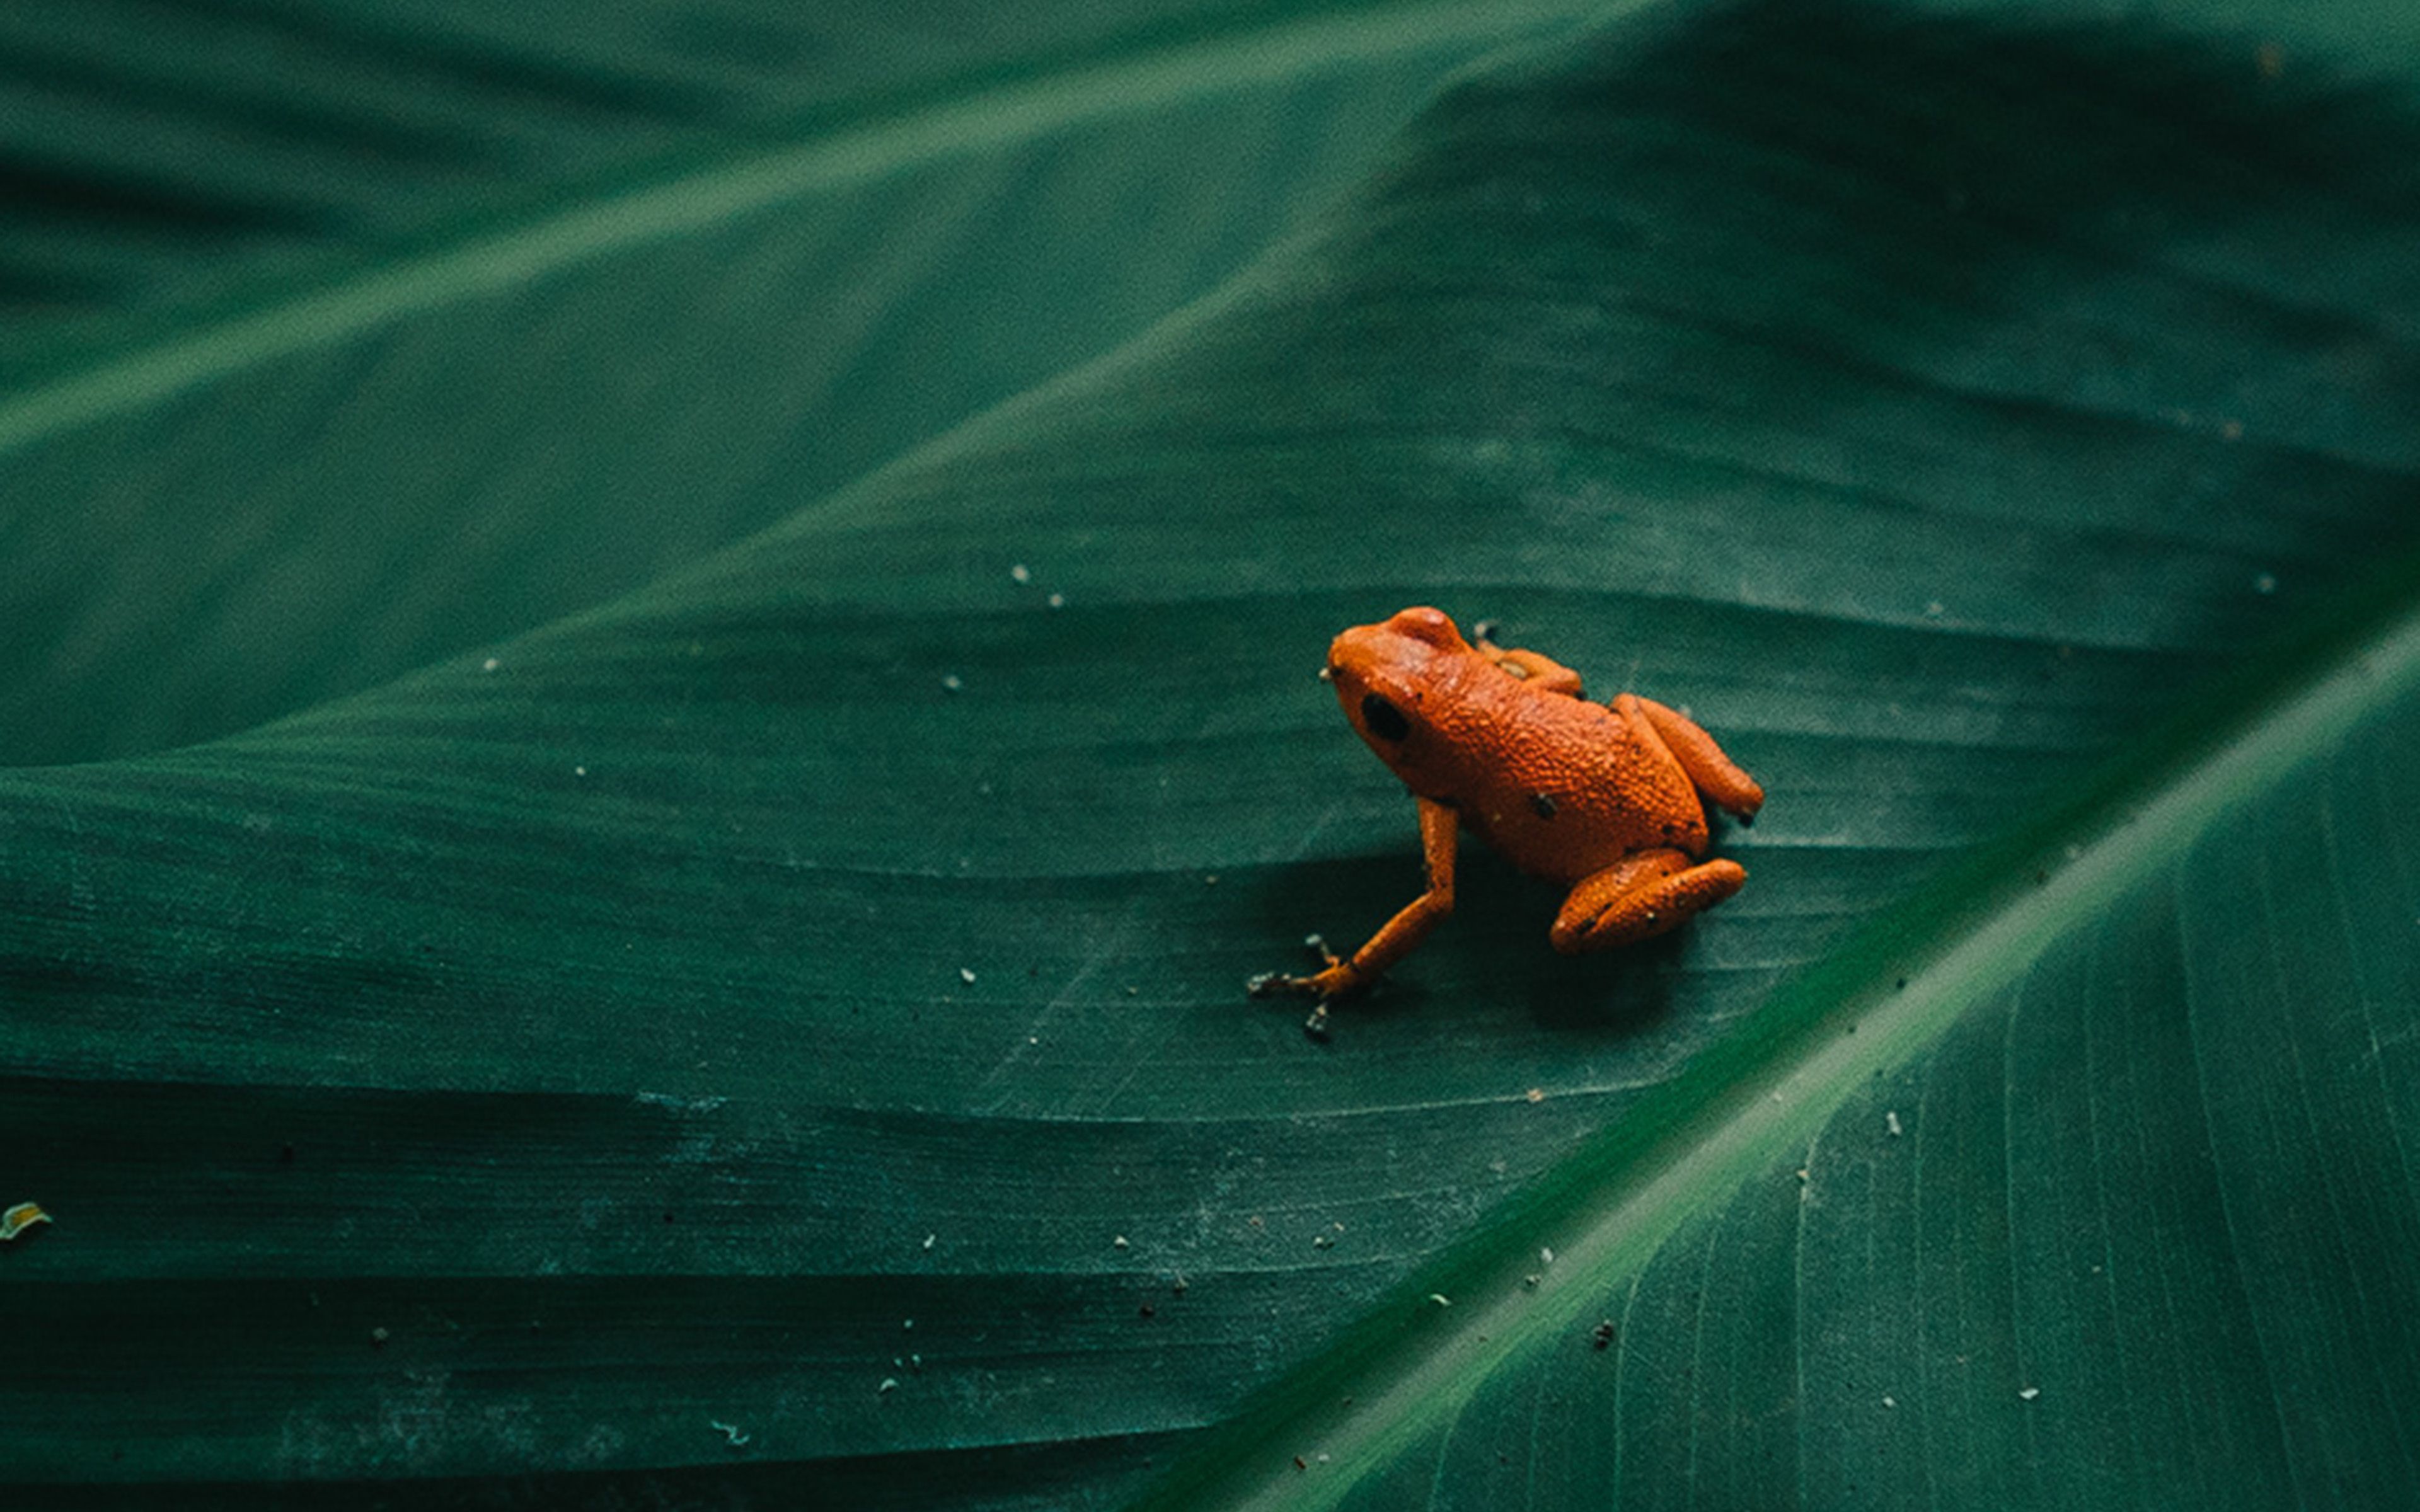 An orange frog sitting on a green leaf. - Frog